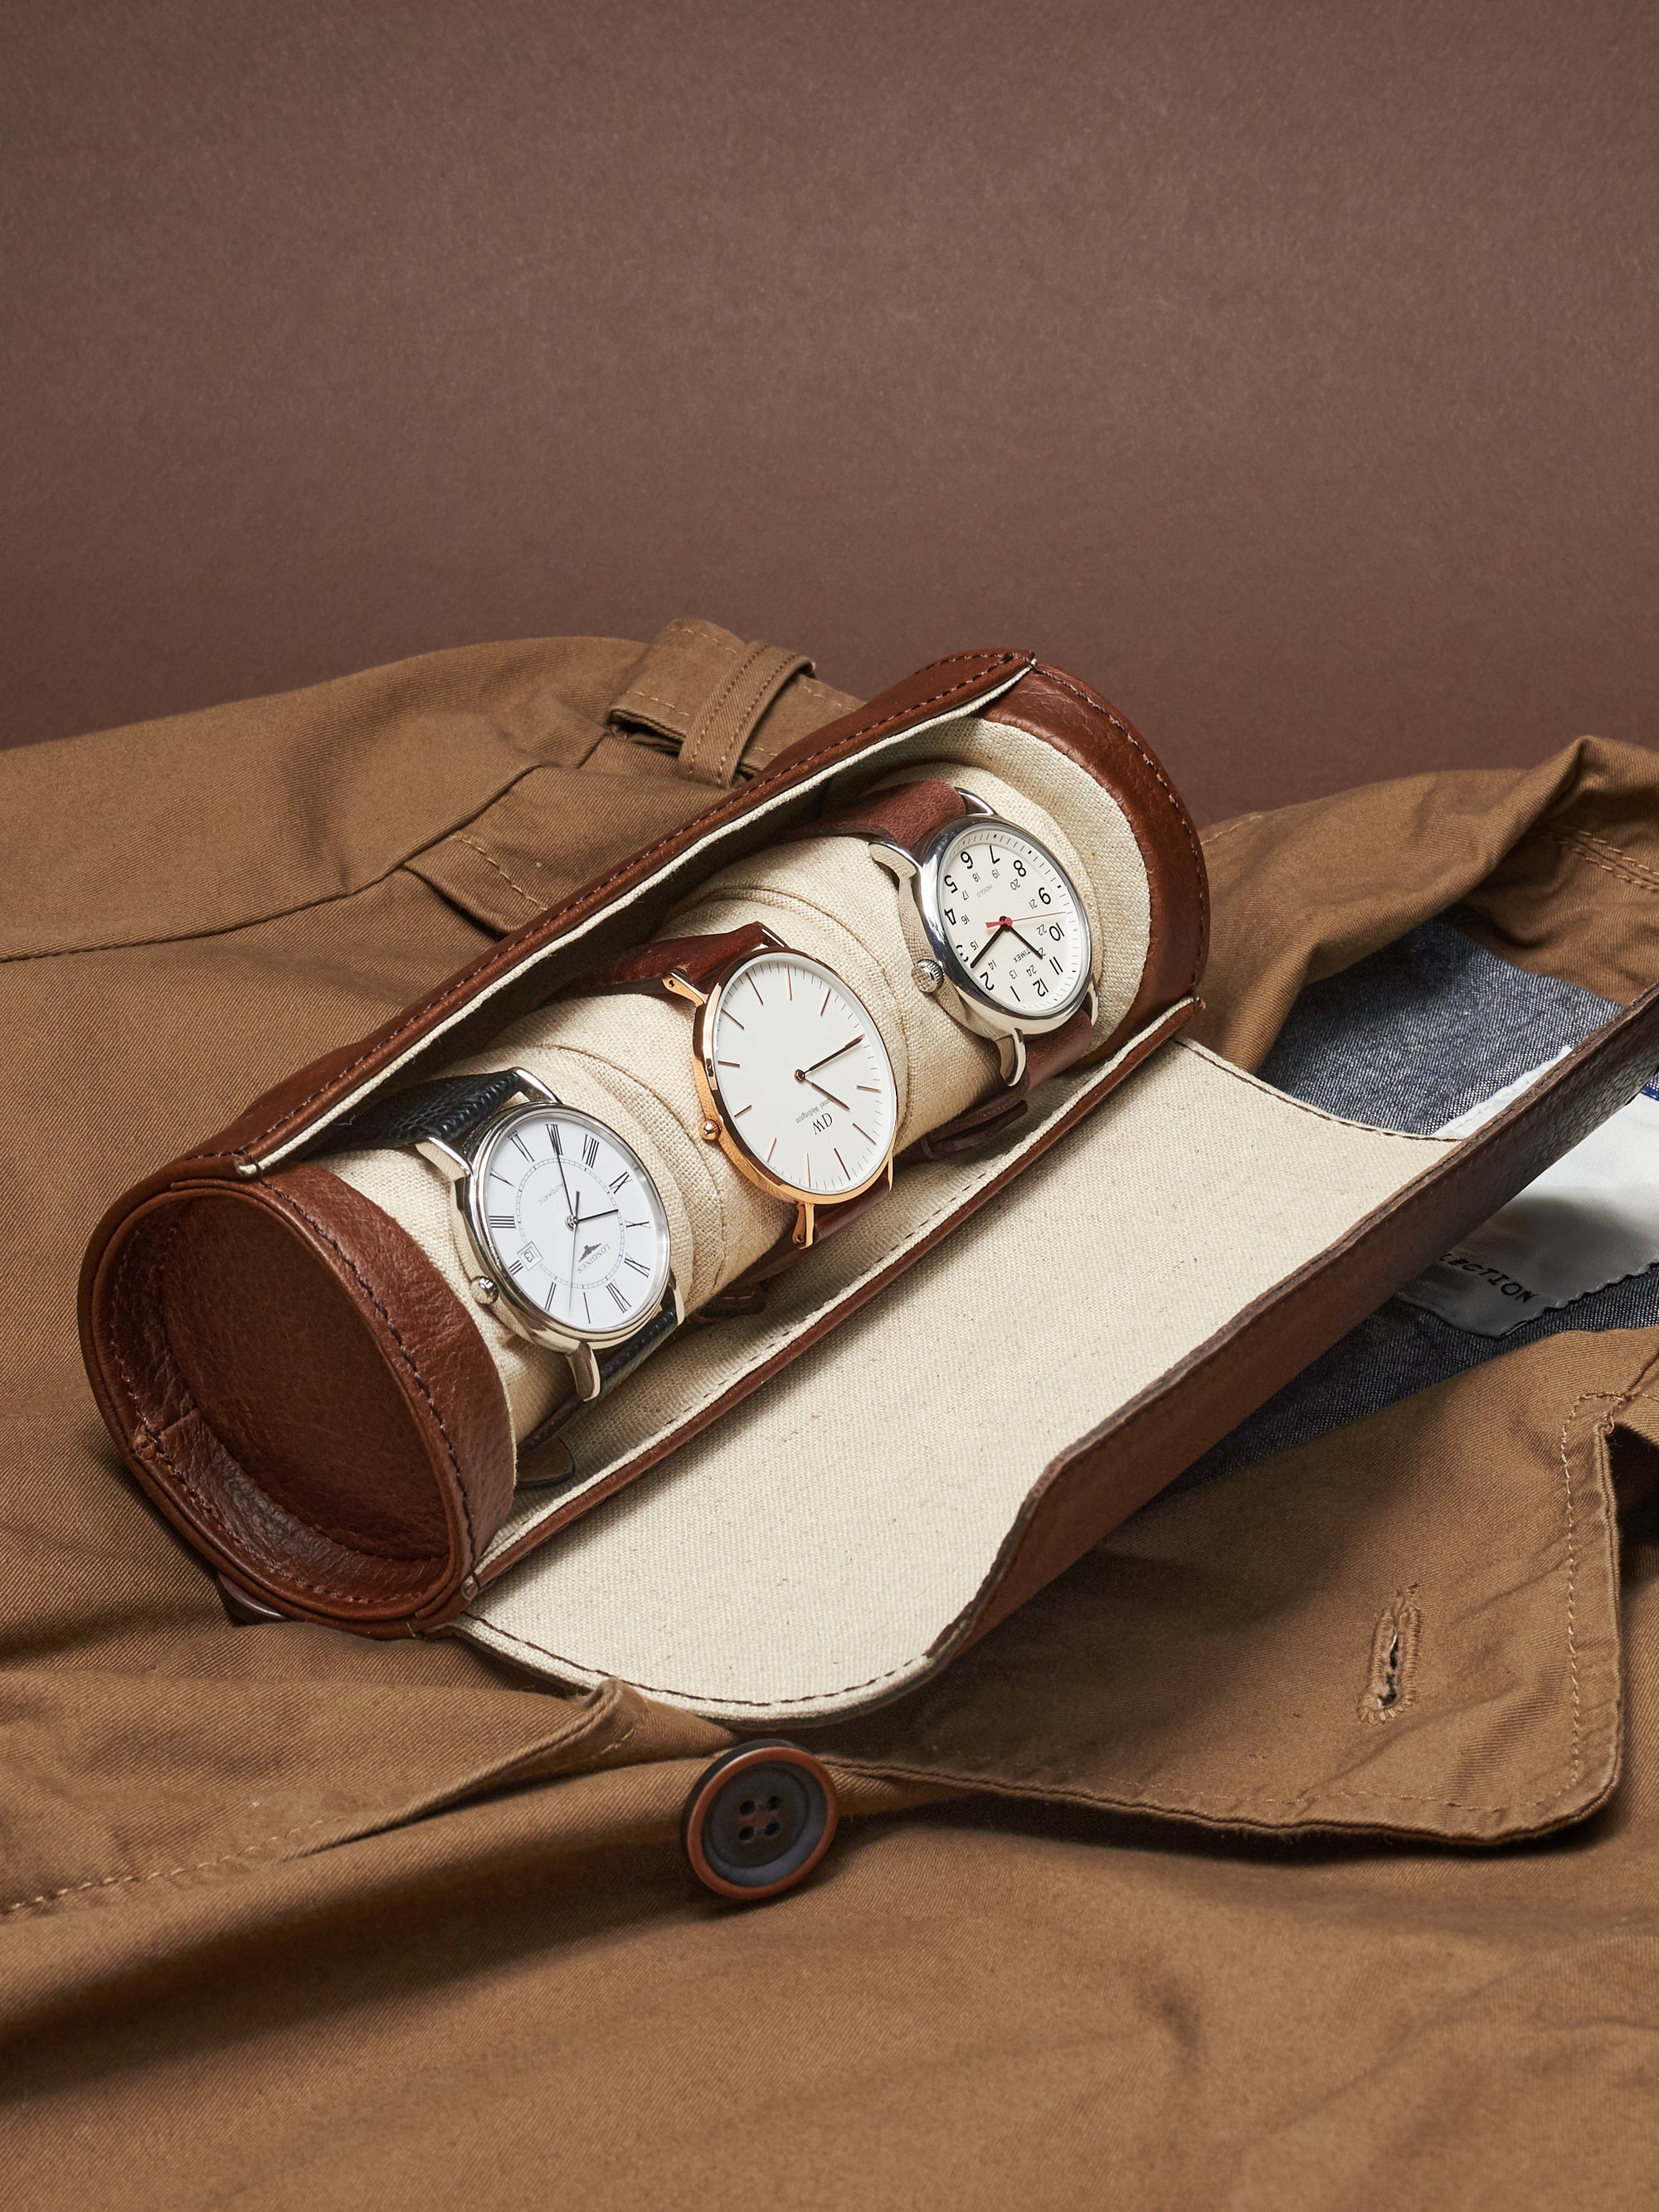 Timex watches 35 mm case brown